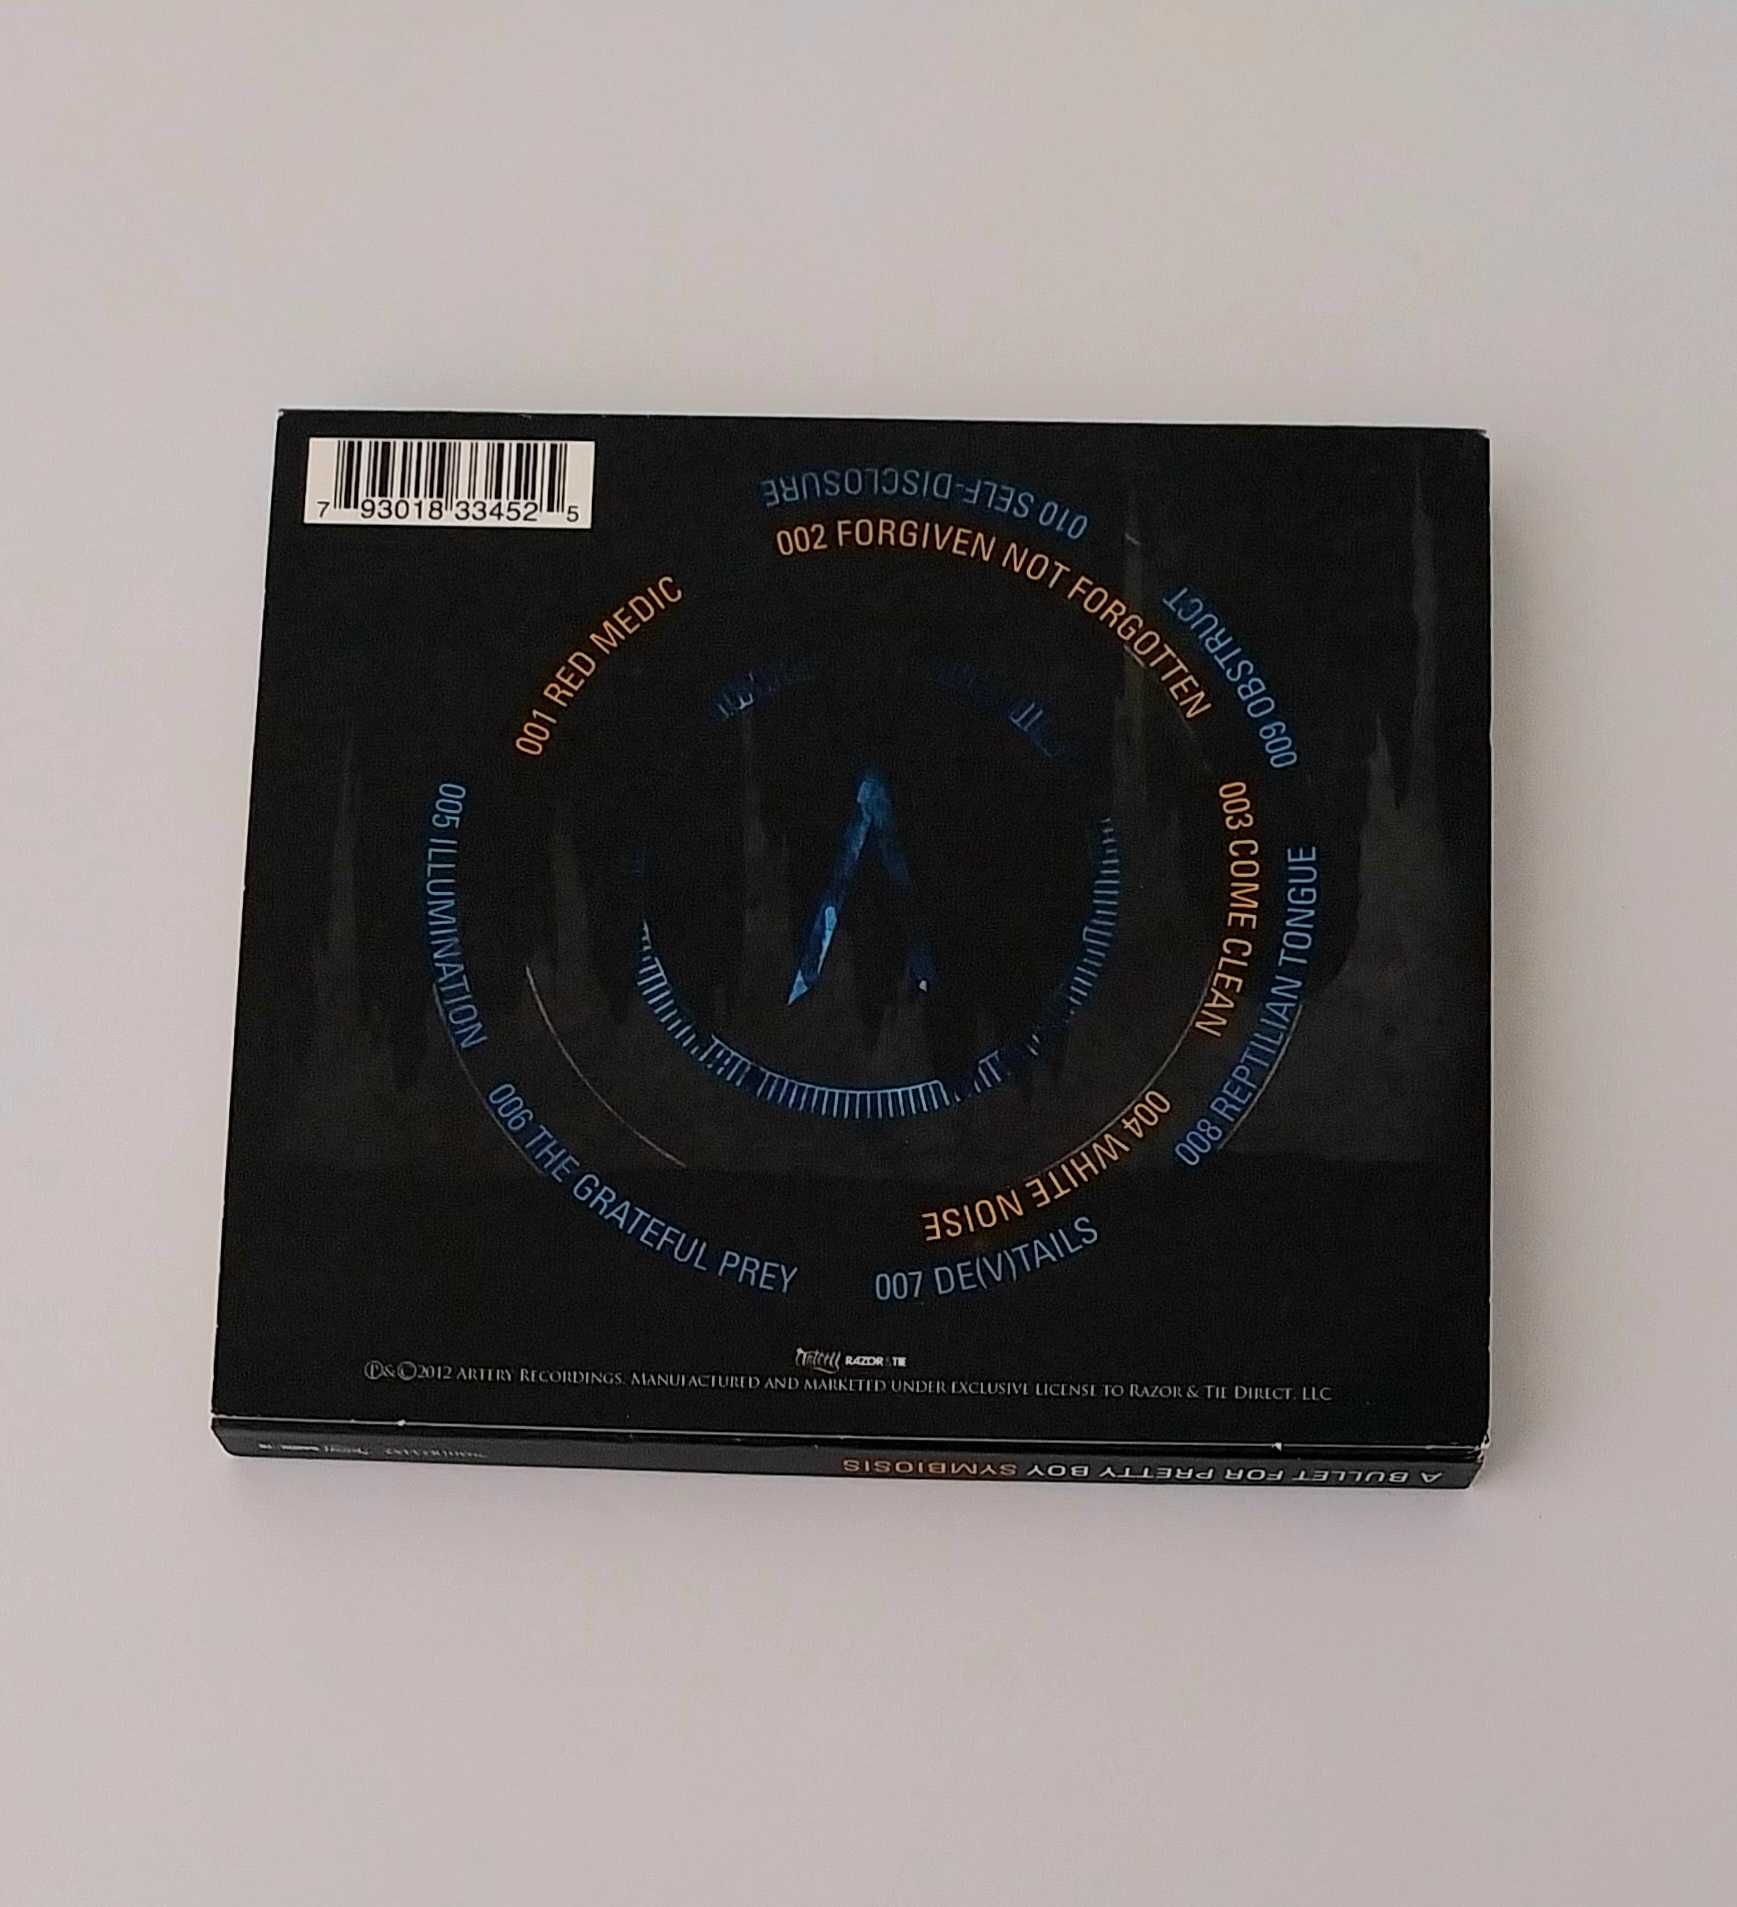 A Bullet For Pretty Boy - Symbiosis CD slipcase